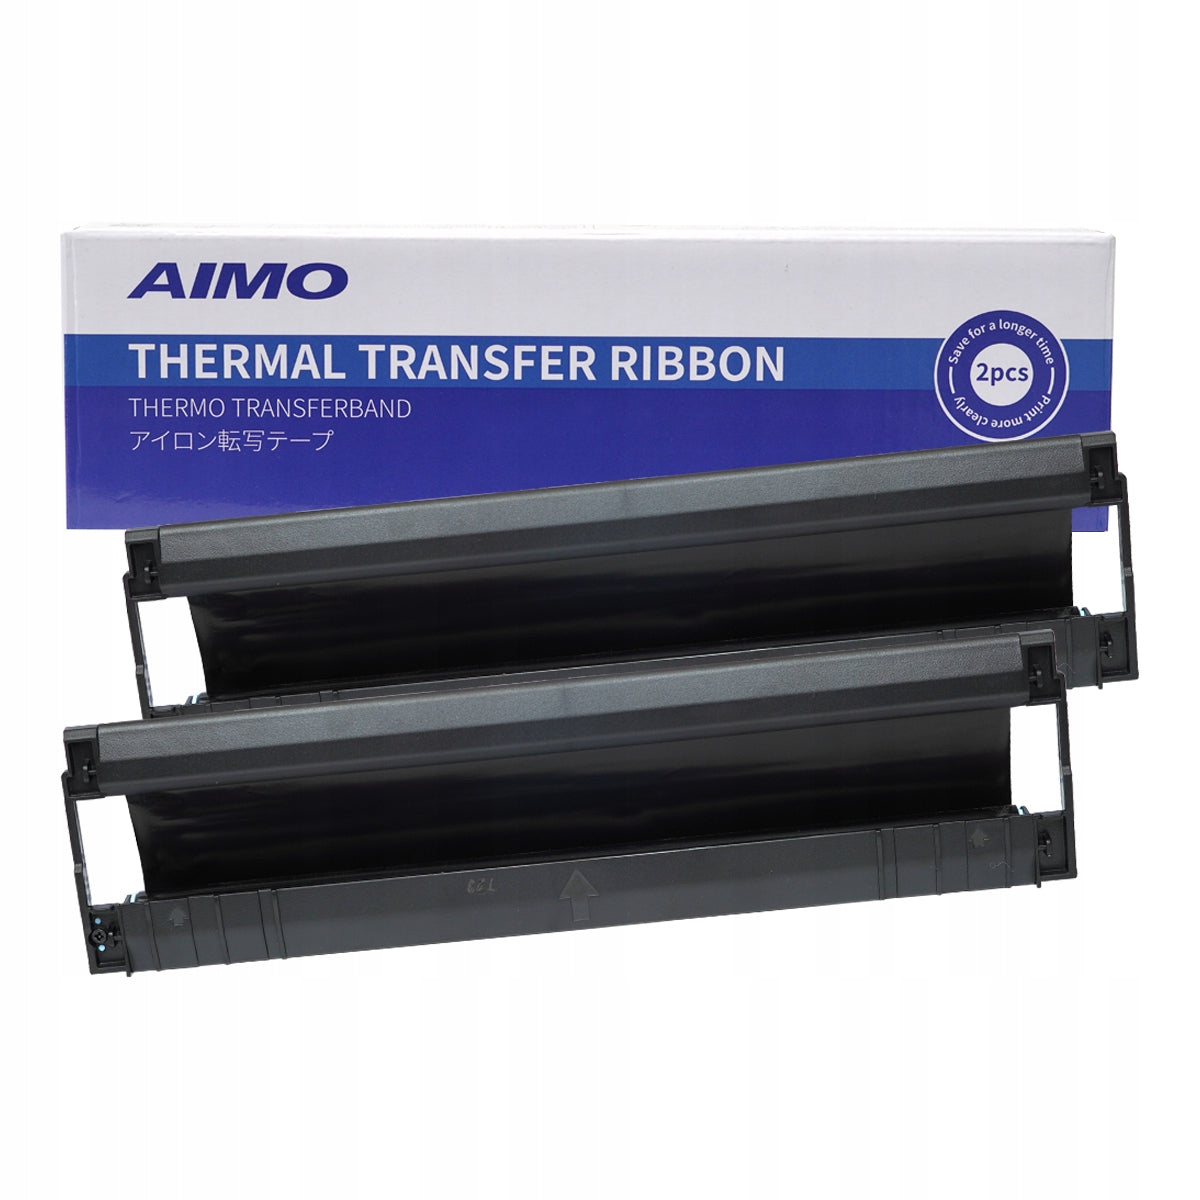 AIMO P832 Thermal Transfer Ribbon Cartridge